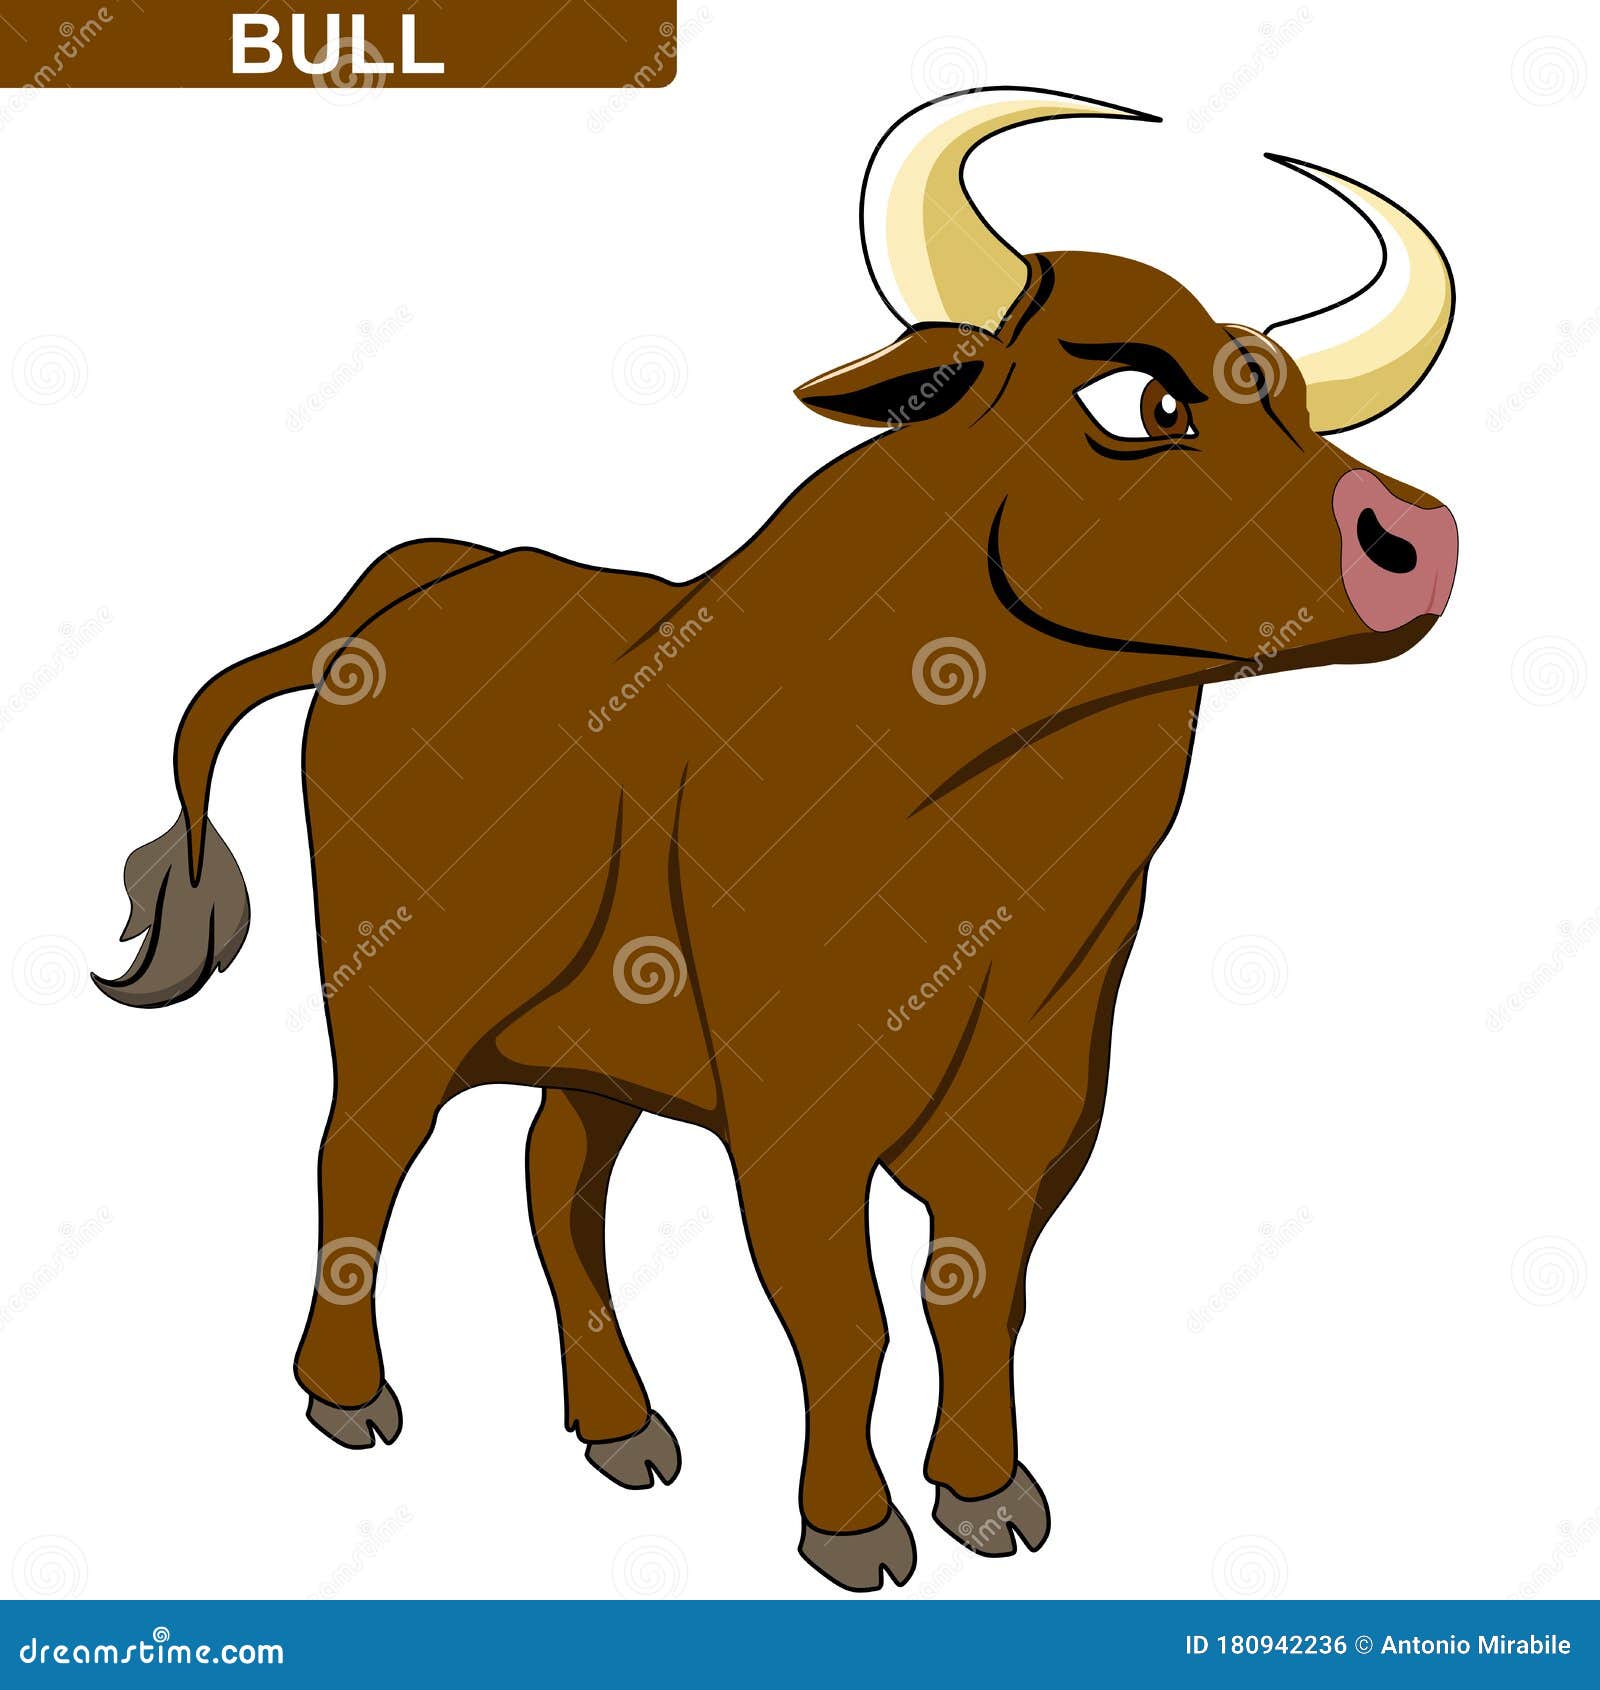  of a bull cartoon